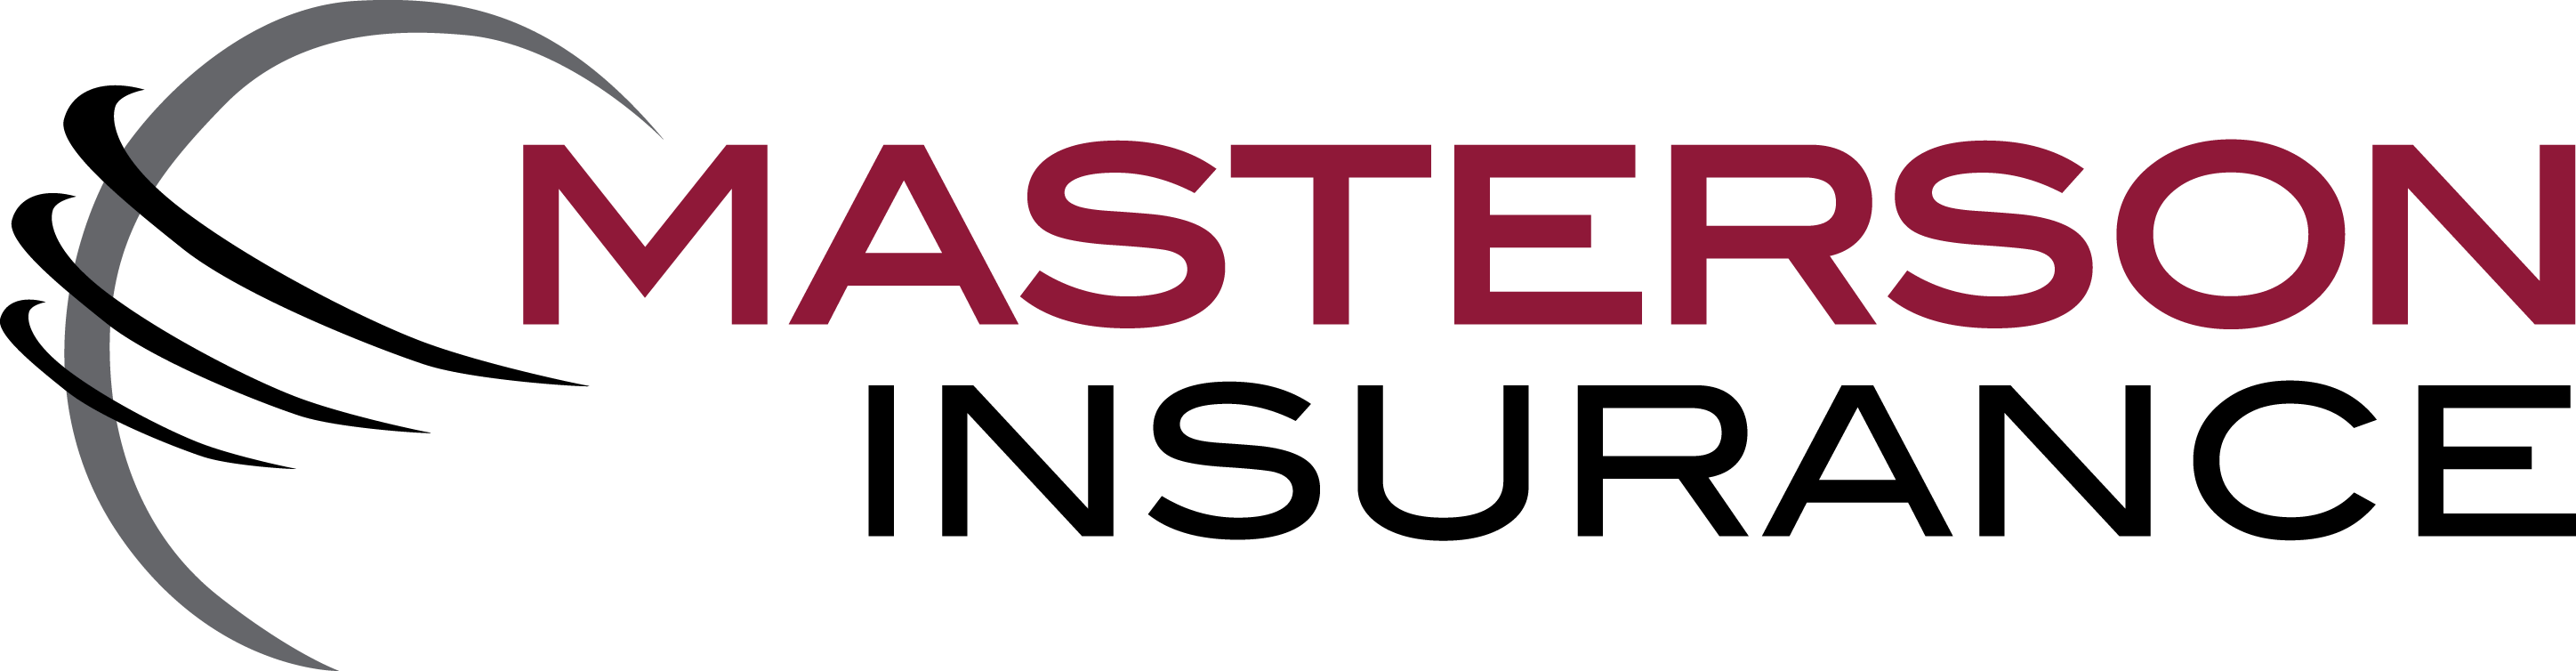 Masterson Insurance Logo